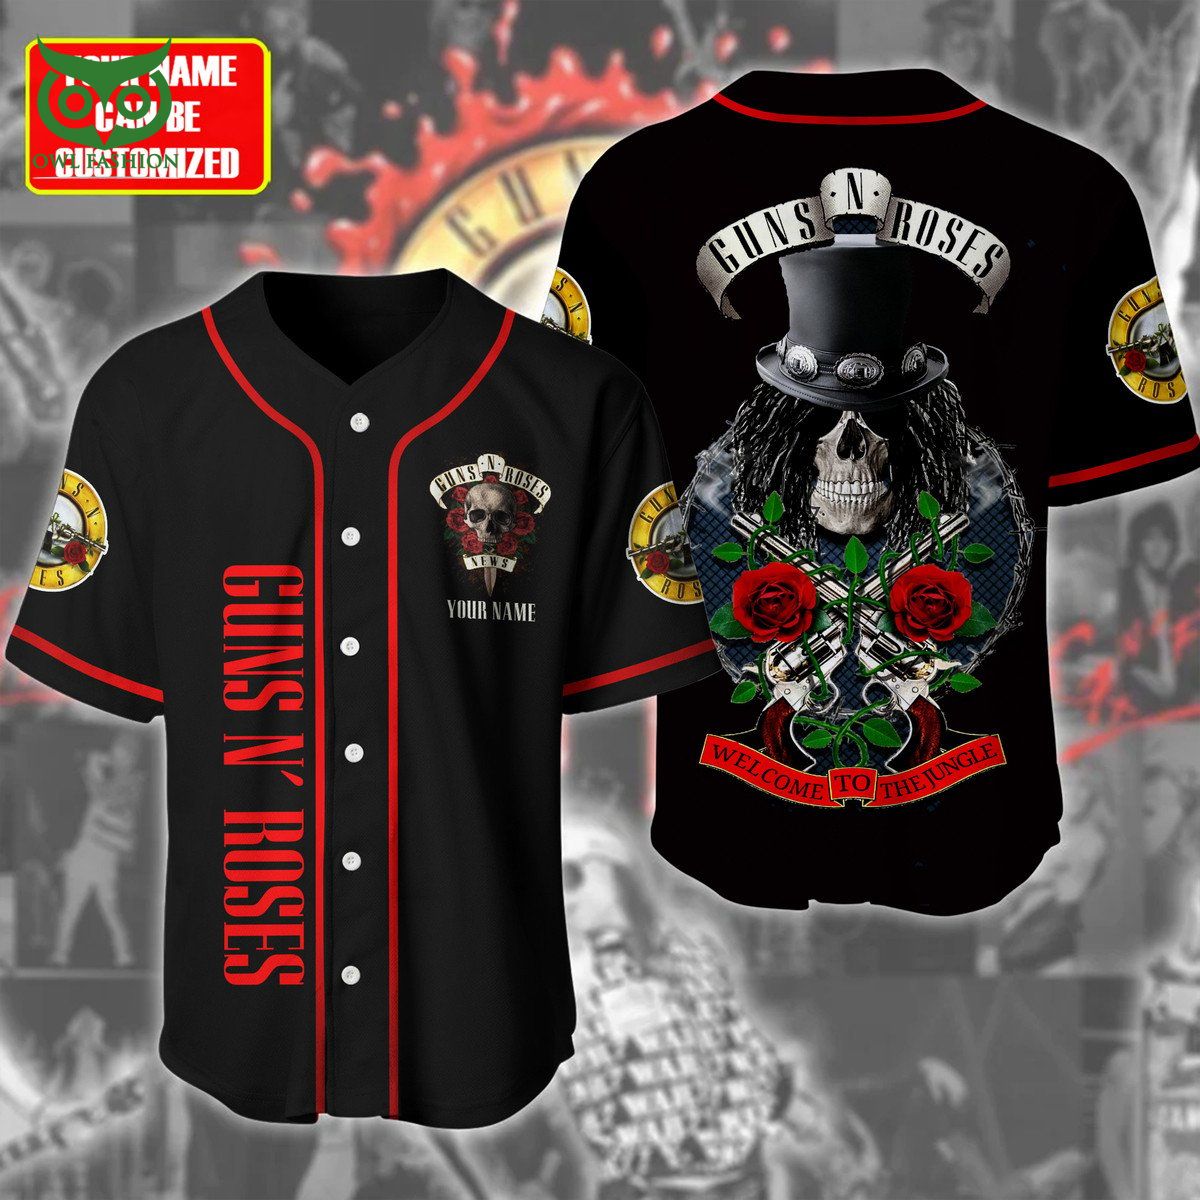 Personalized Guns N Roses Baseball Jersey Shirt Damn good